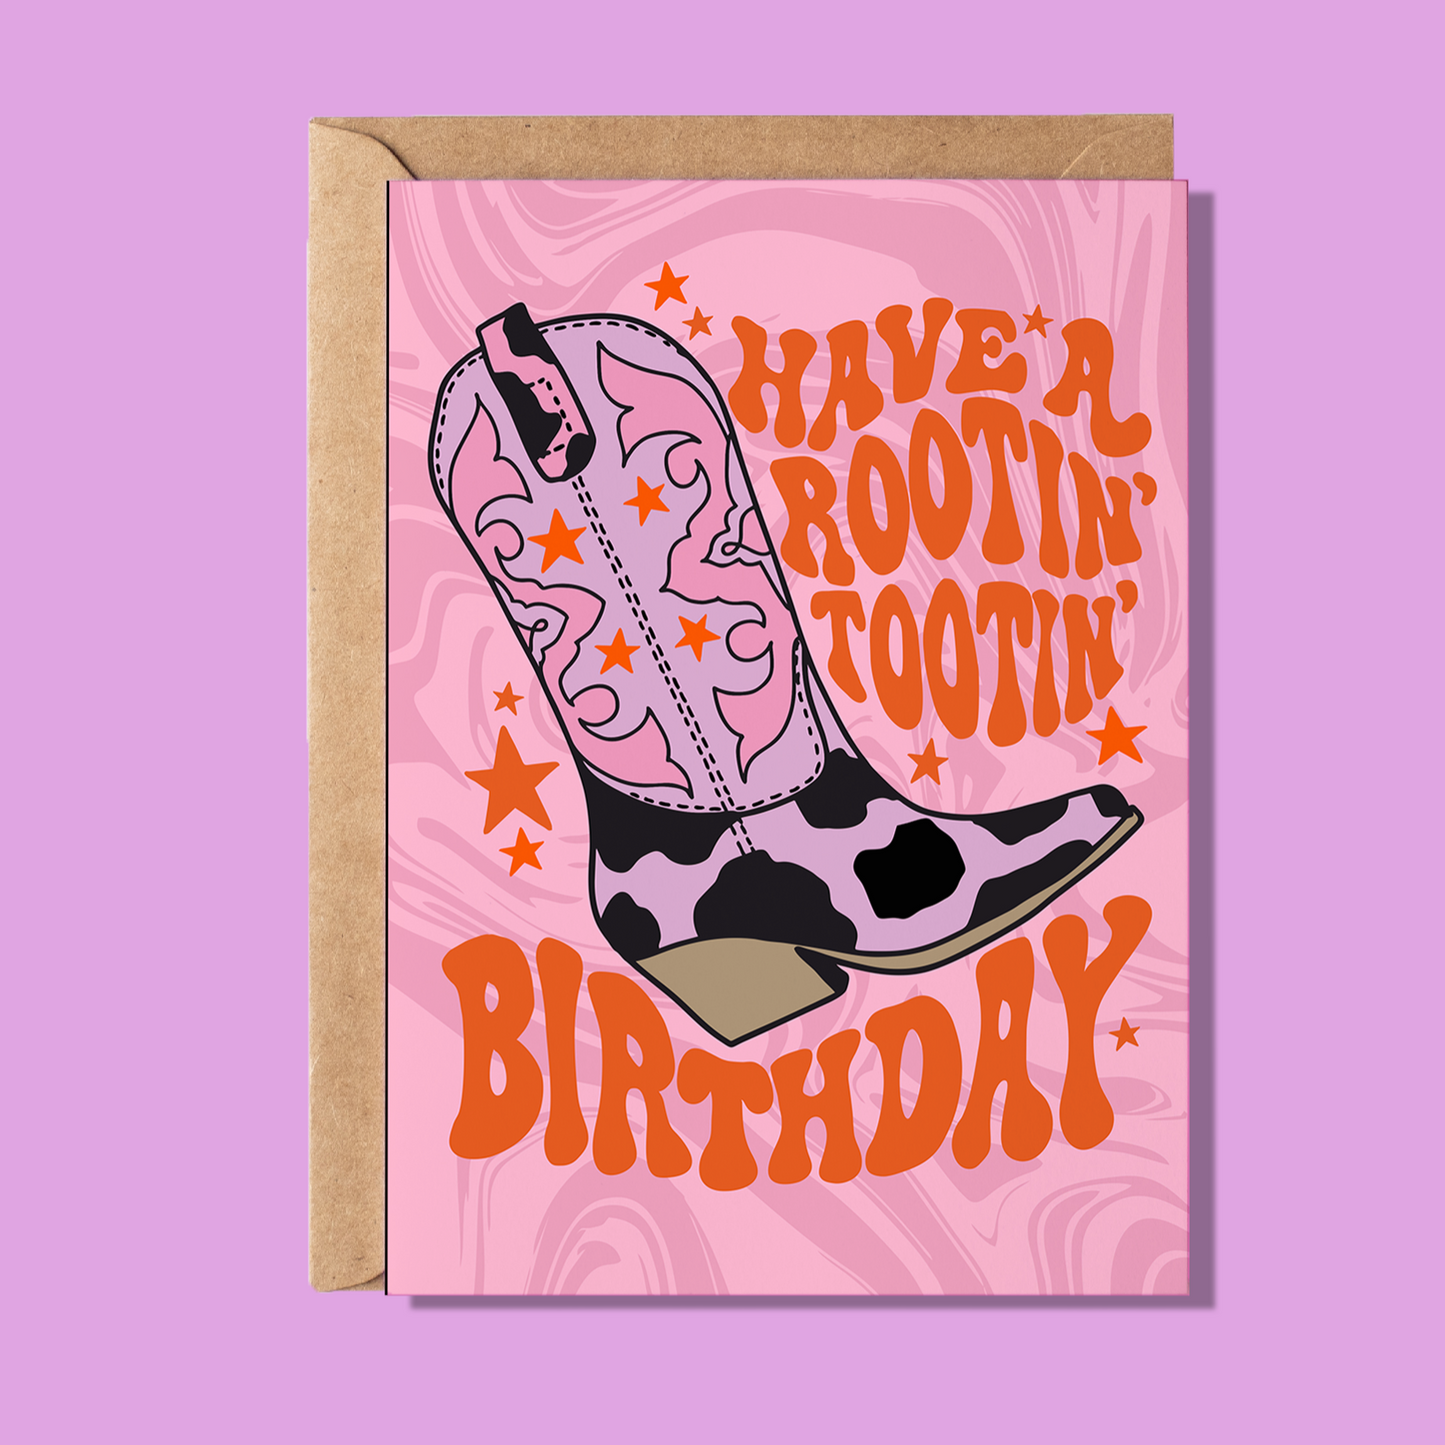 Rootin' Tootin' Cowboy Birthday Greeting Card